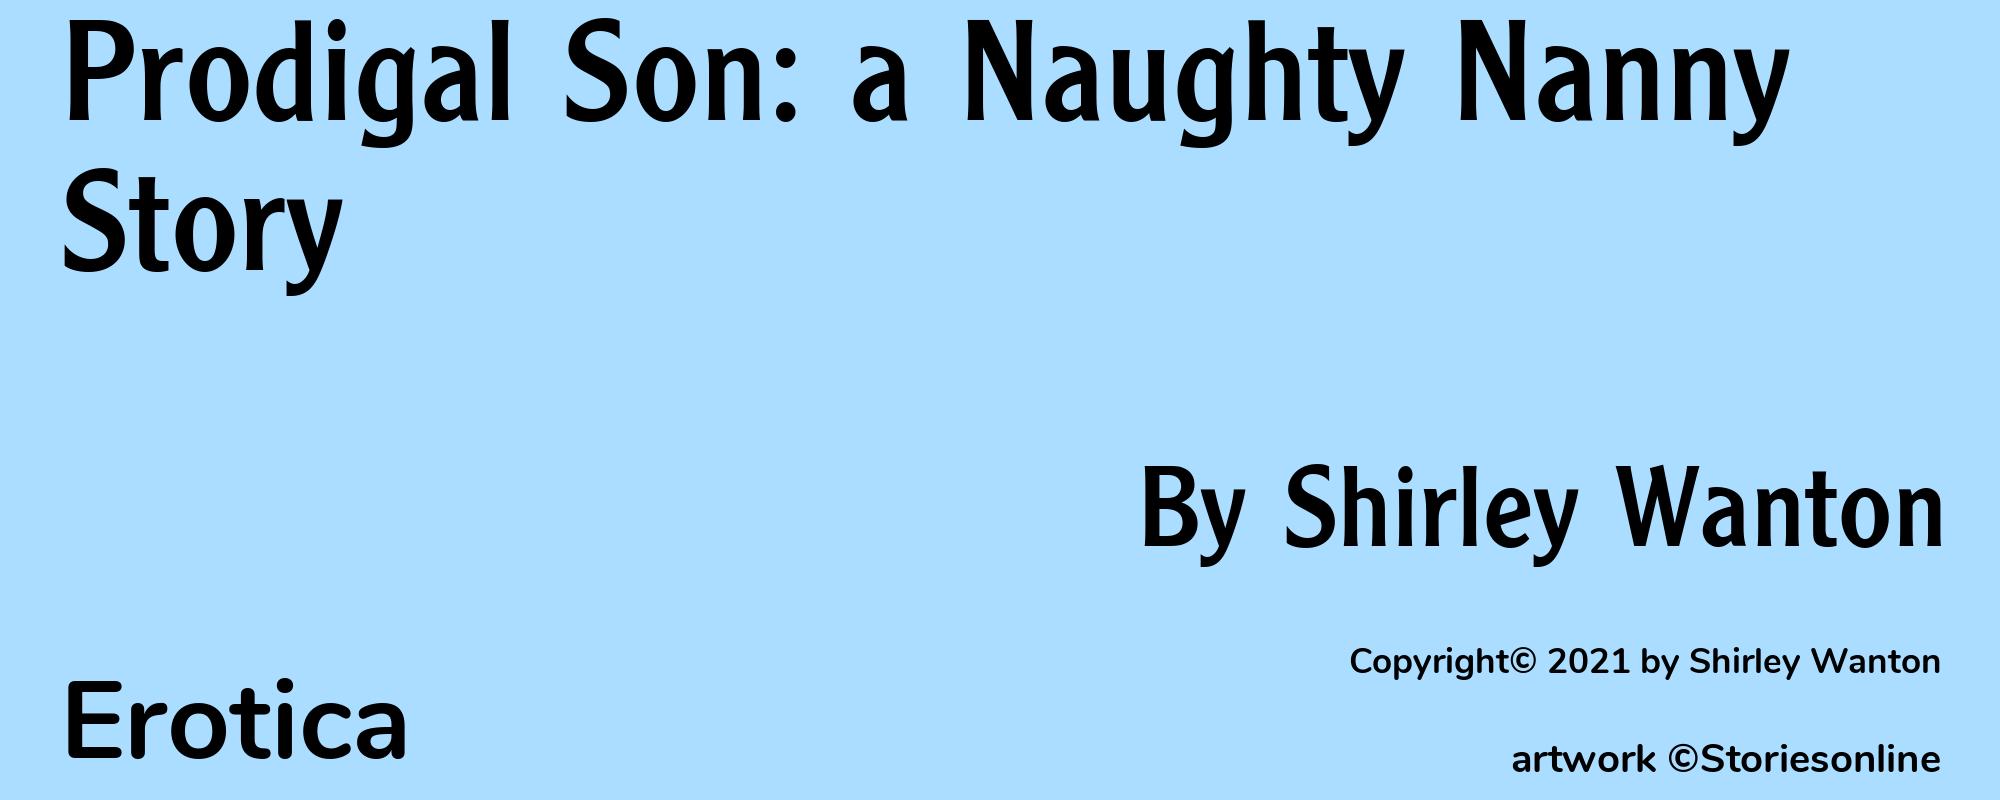 Prodigal Son: a Naughty Nanny Story - Cover